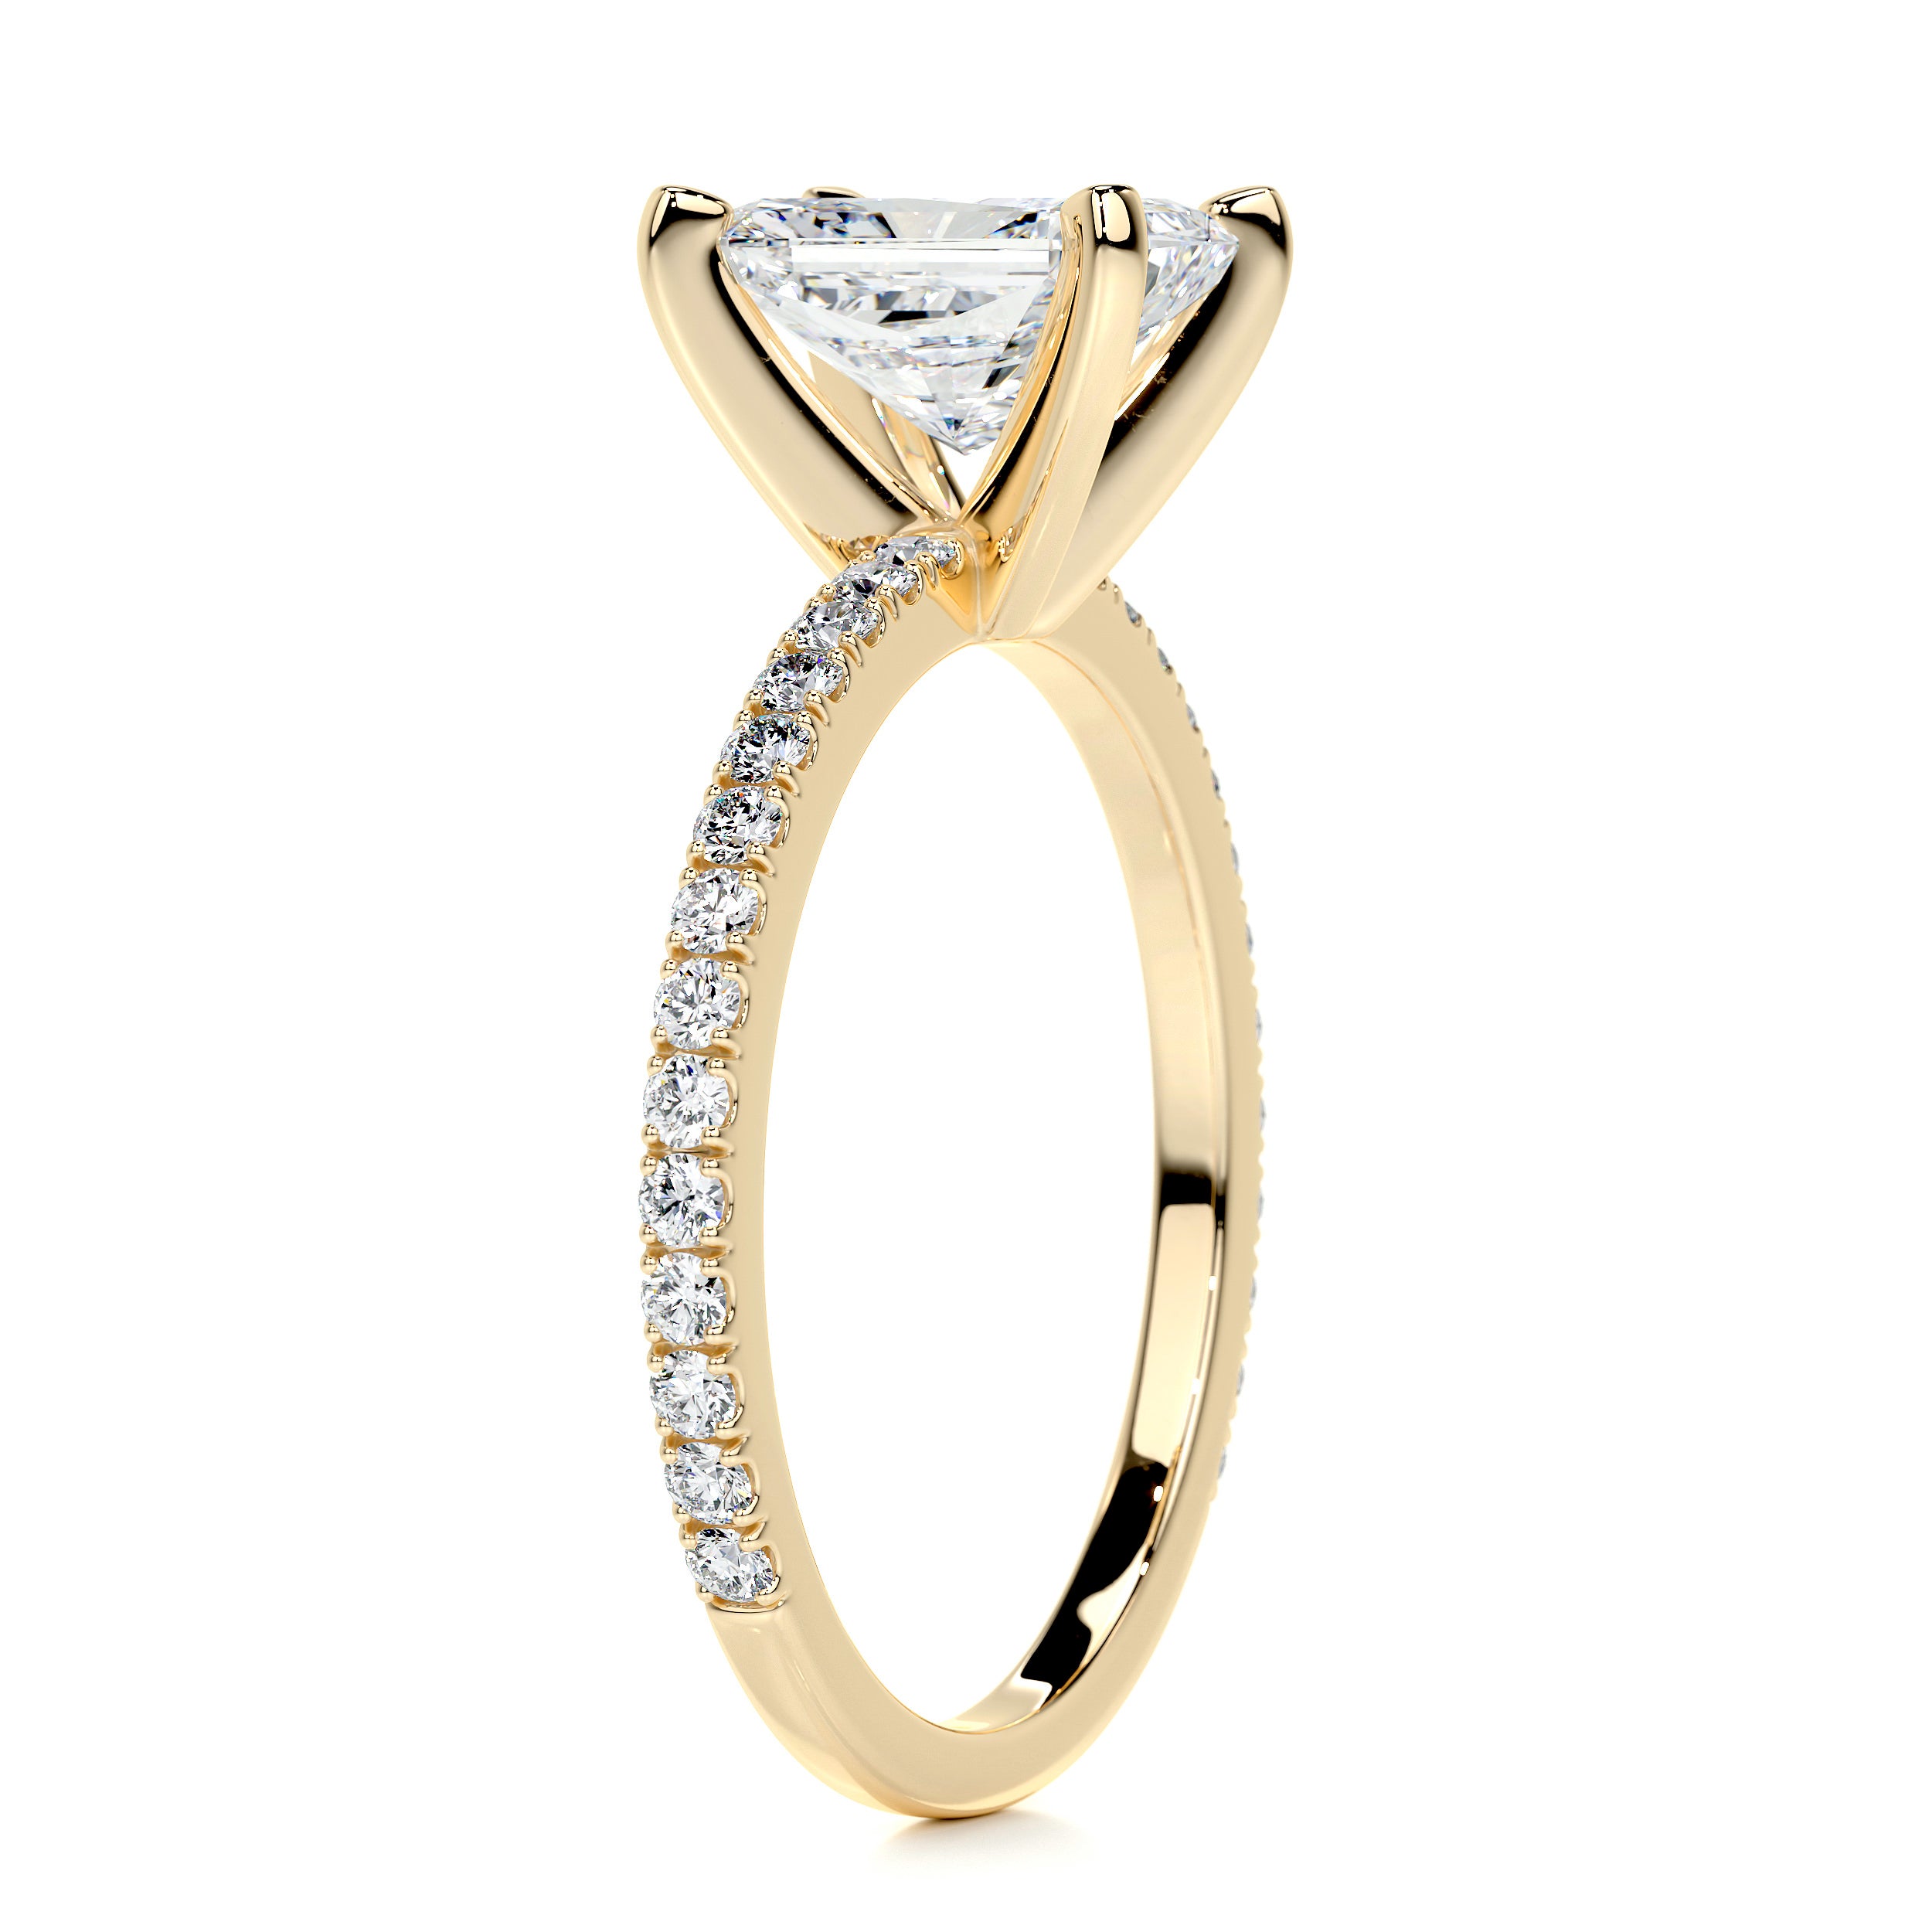 Audrey Diamond Engagement Ring   (1.8 Carat) -18K Yellow Gold